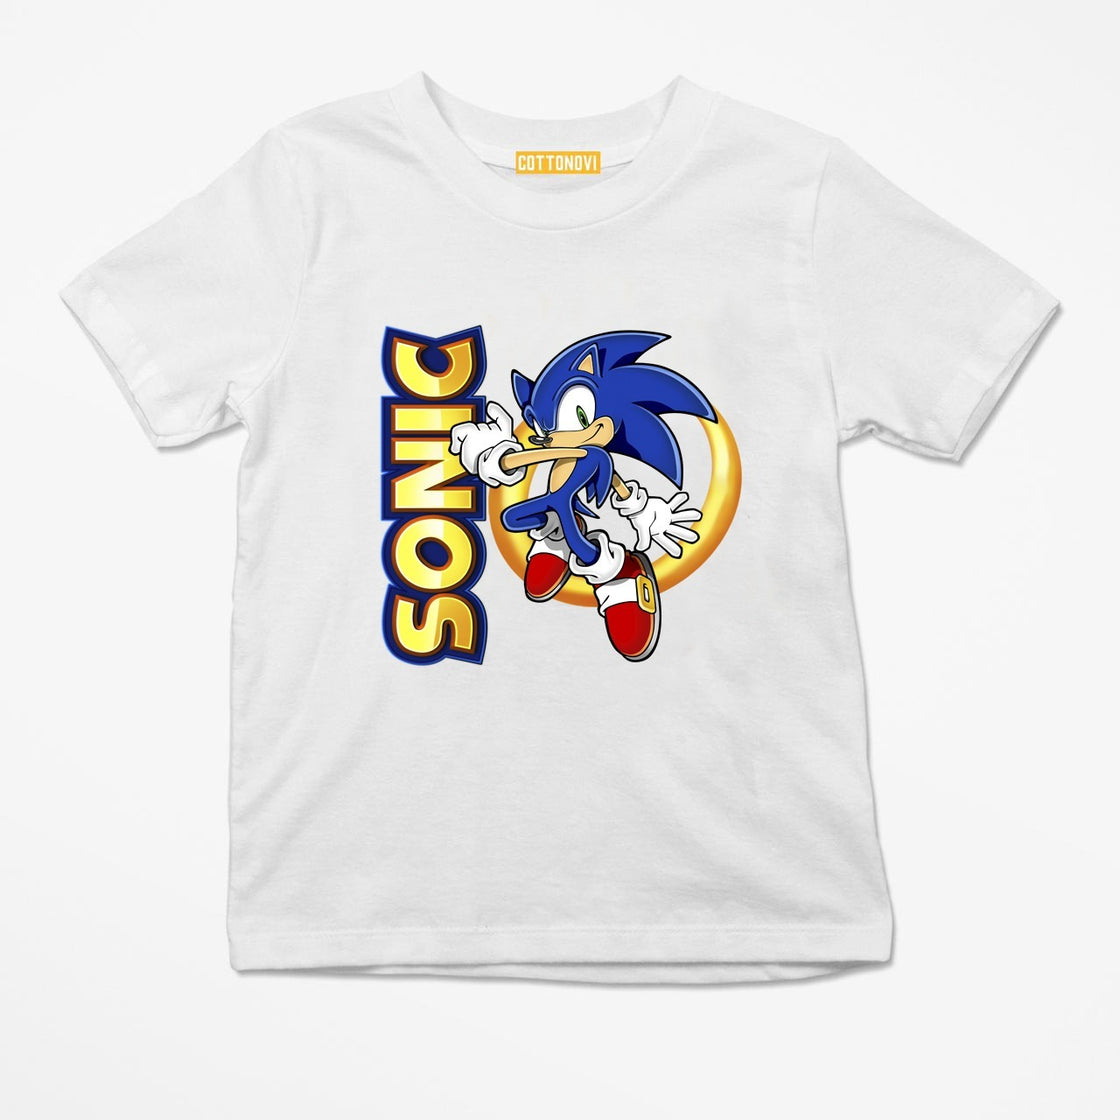 New Sonic t-shirt